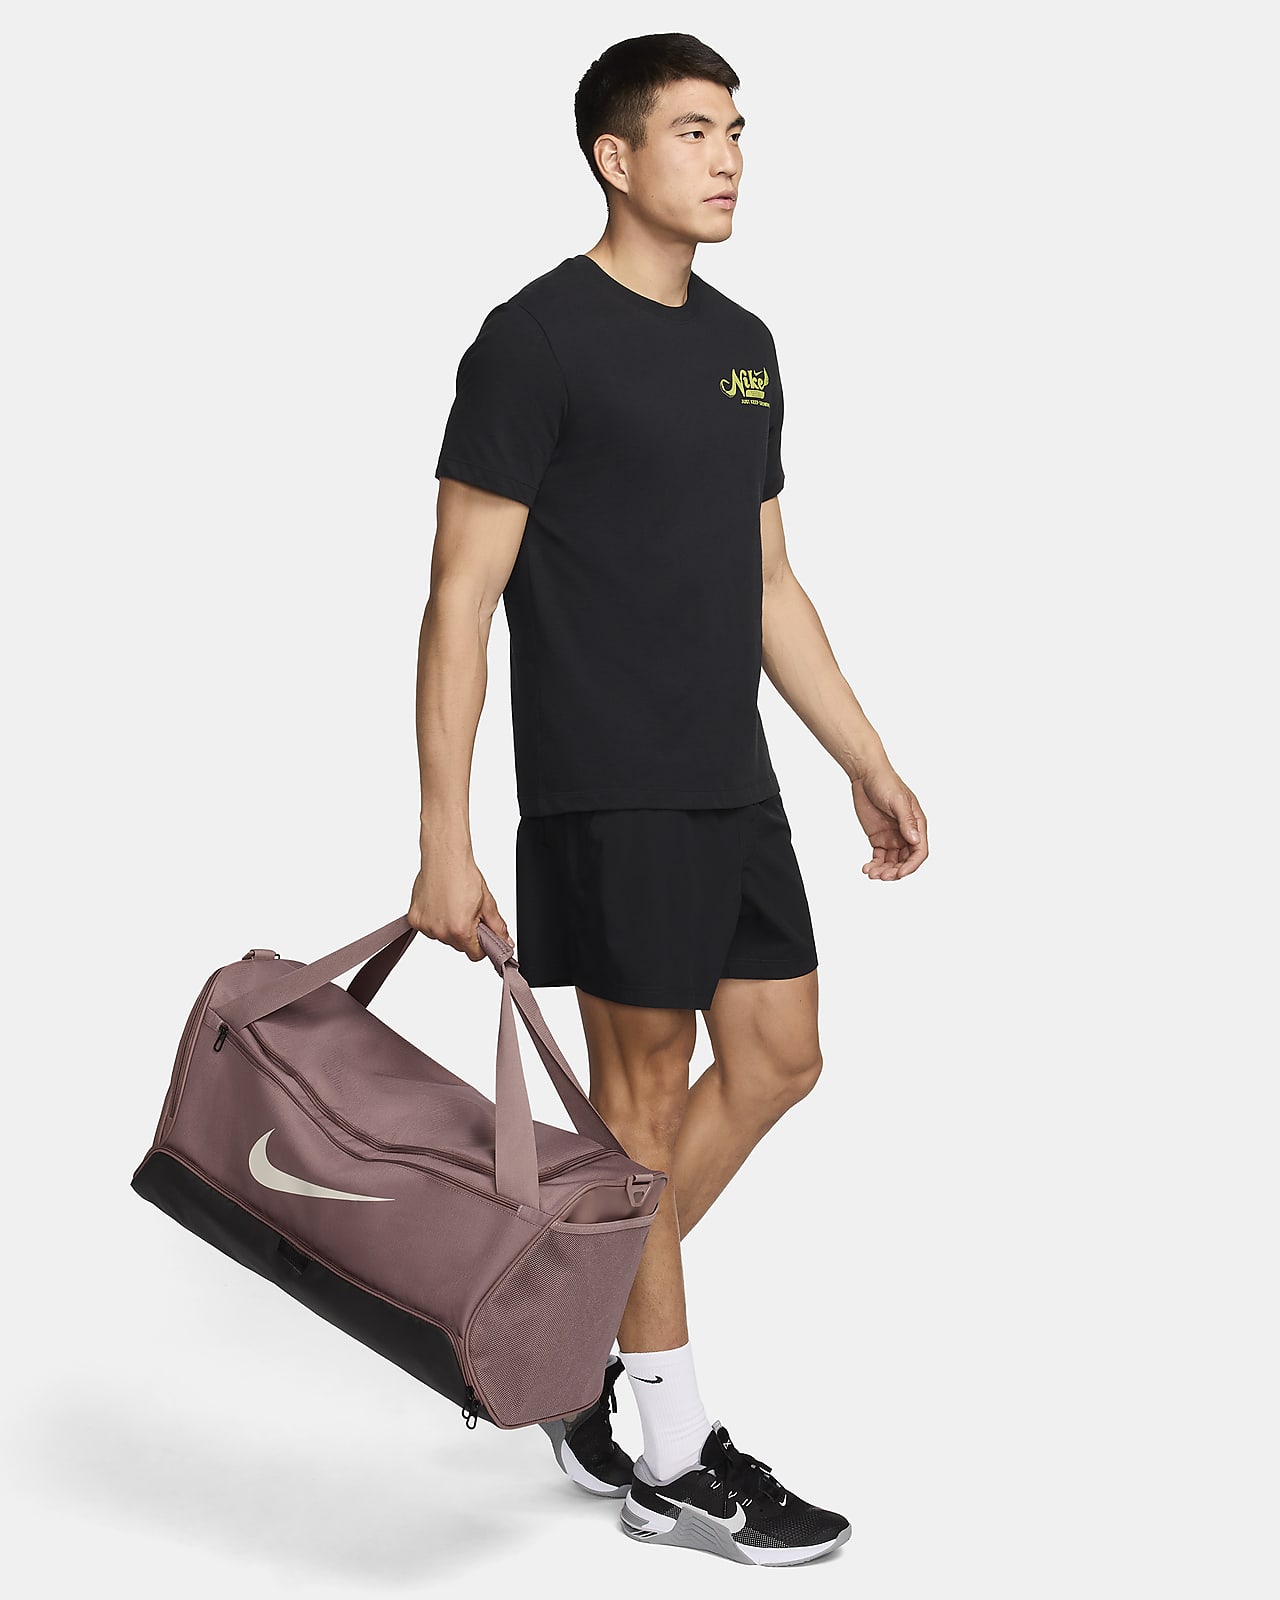 Nike DH7710 Brasilia Medium Duffel Bag